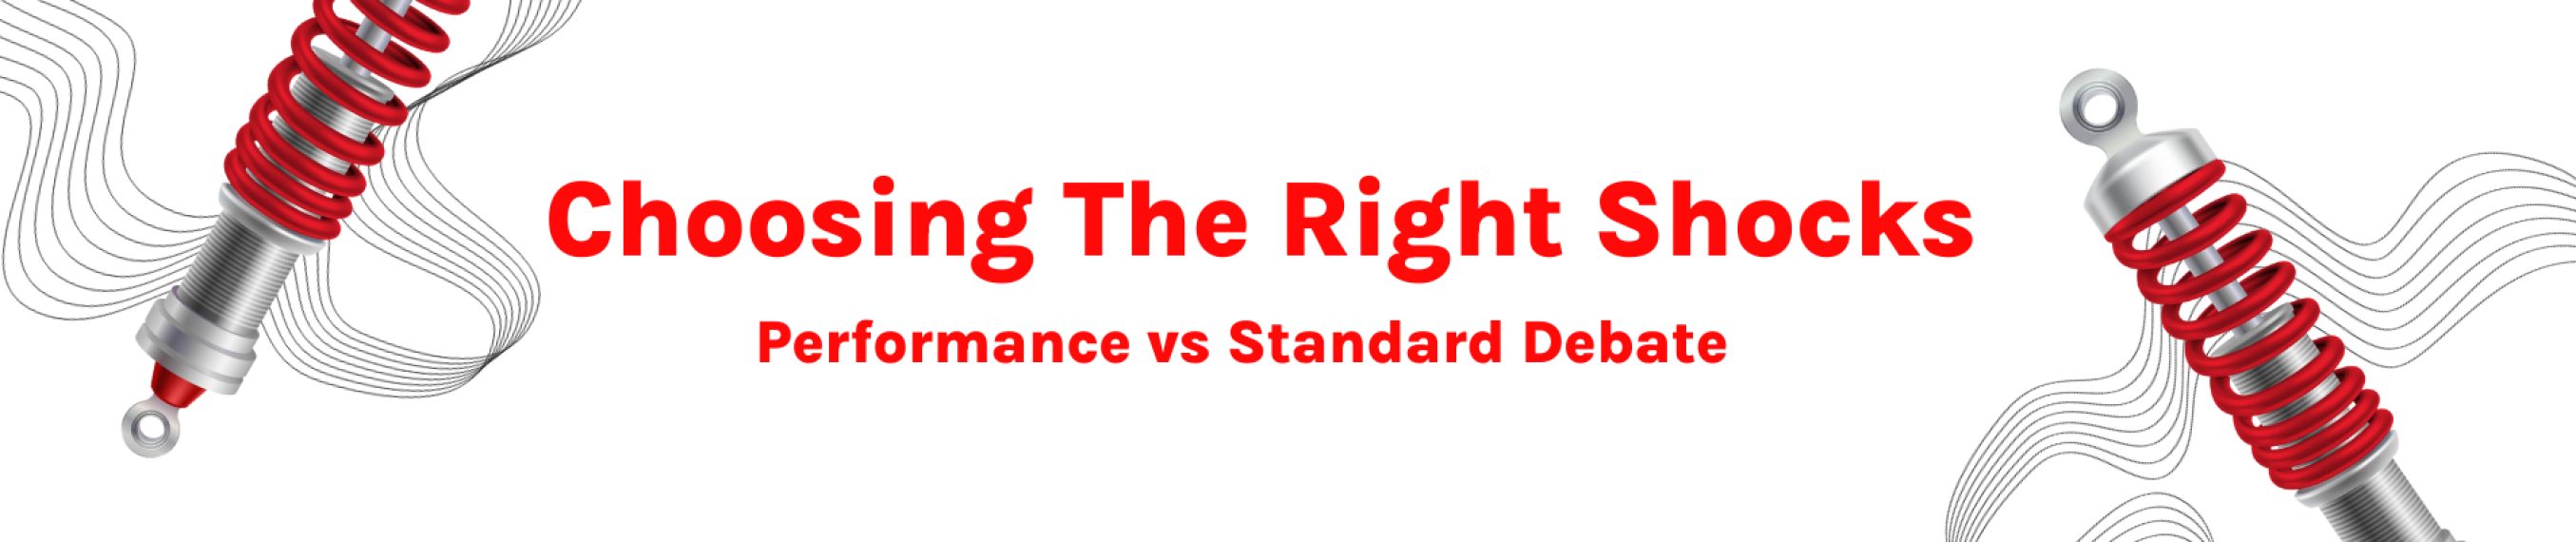 Choosing the Right Shocks: Performance vs. Standard Shocks Debate